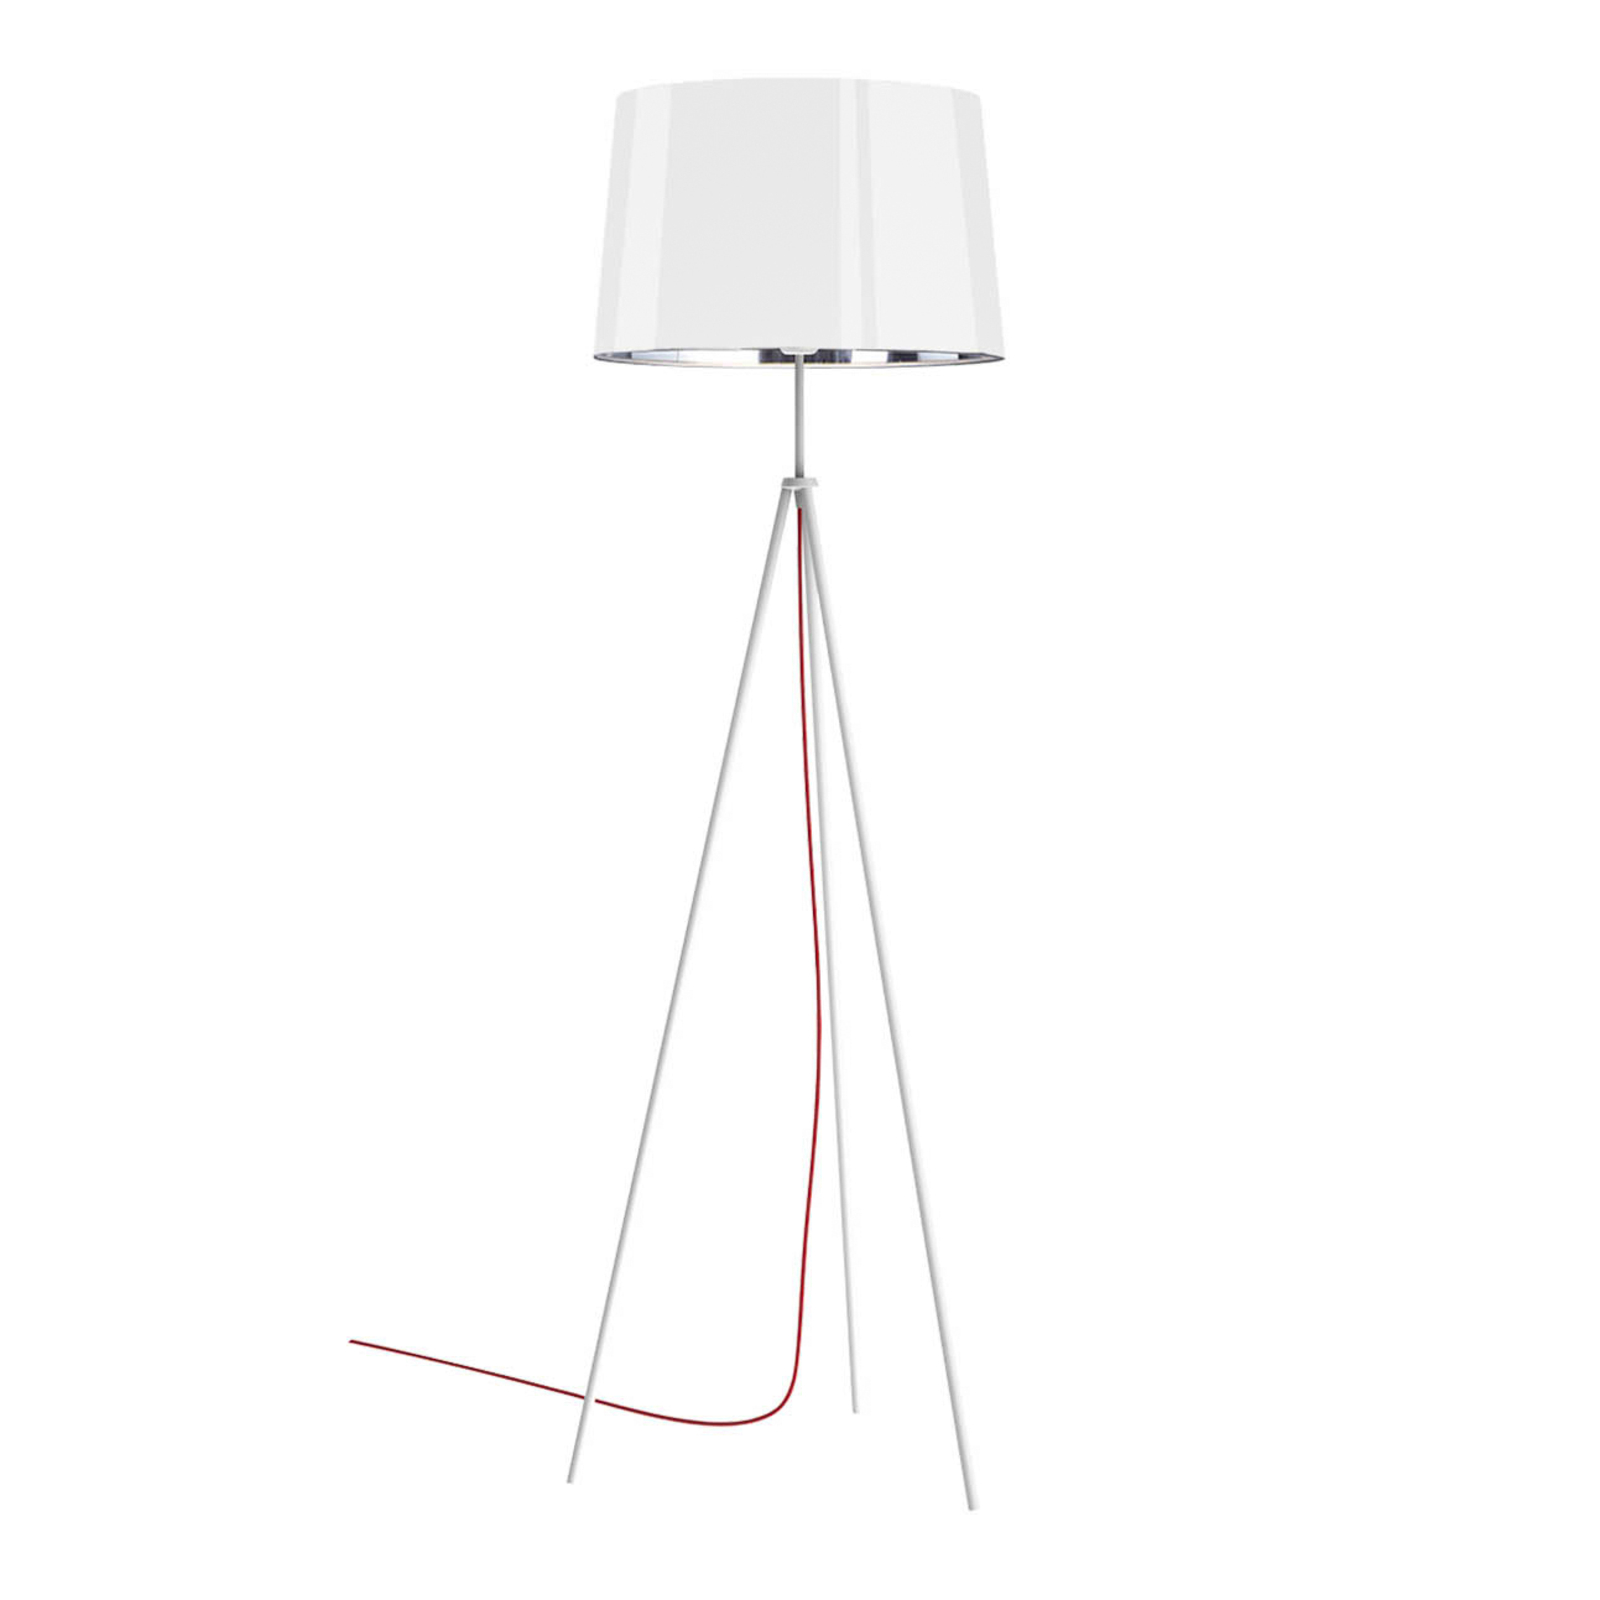 Aluminor Tropic gulvlampe, hvid, rødt kabel